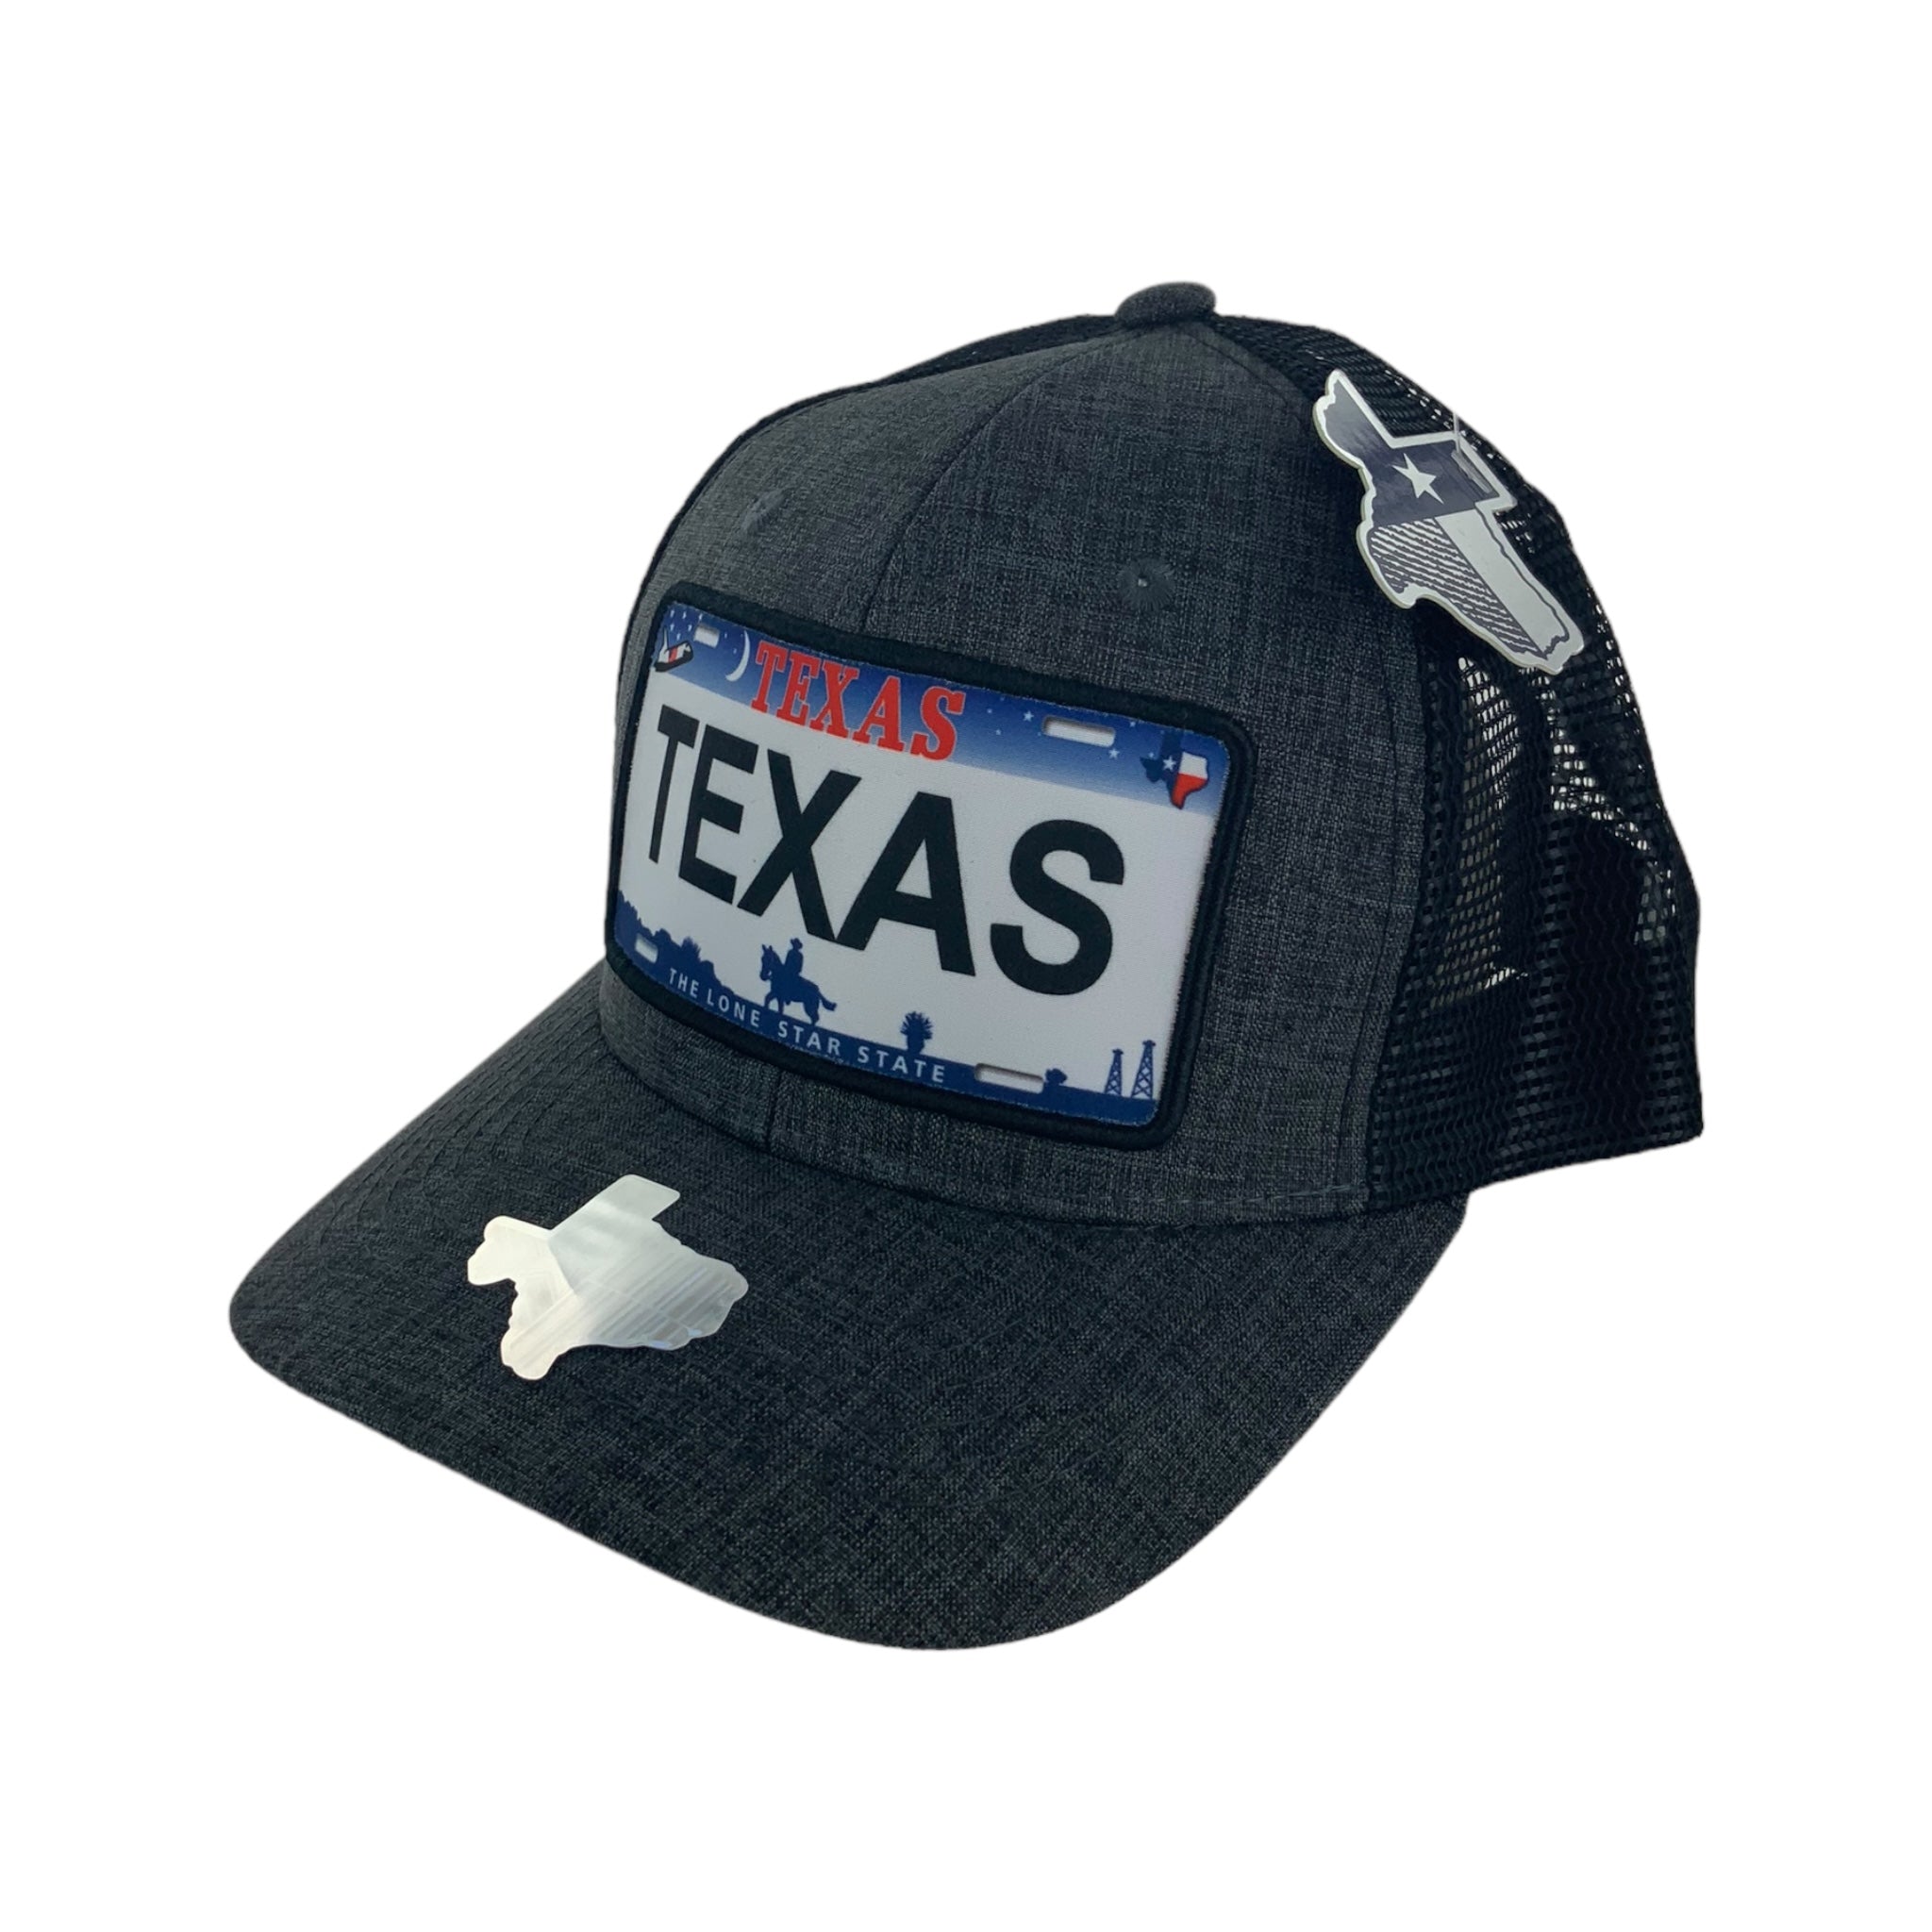 Hat Republic Texas Snapback Gray Black OSFM